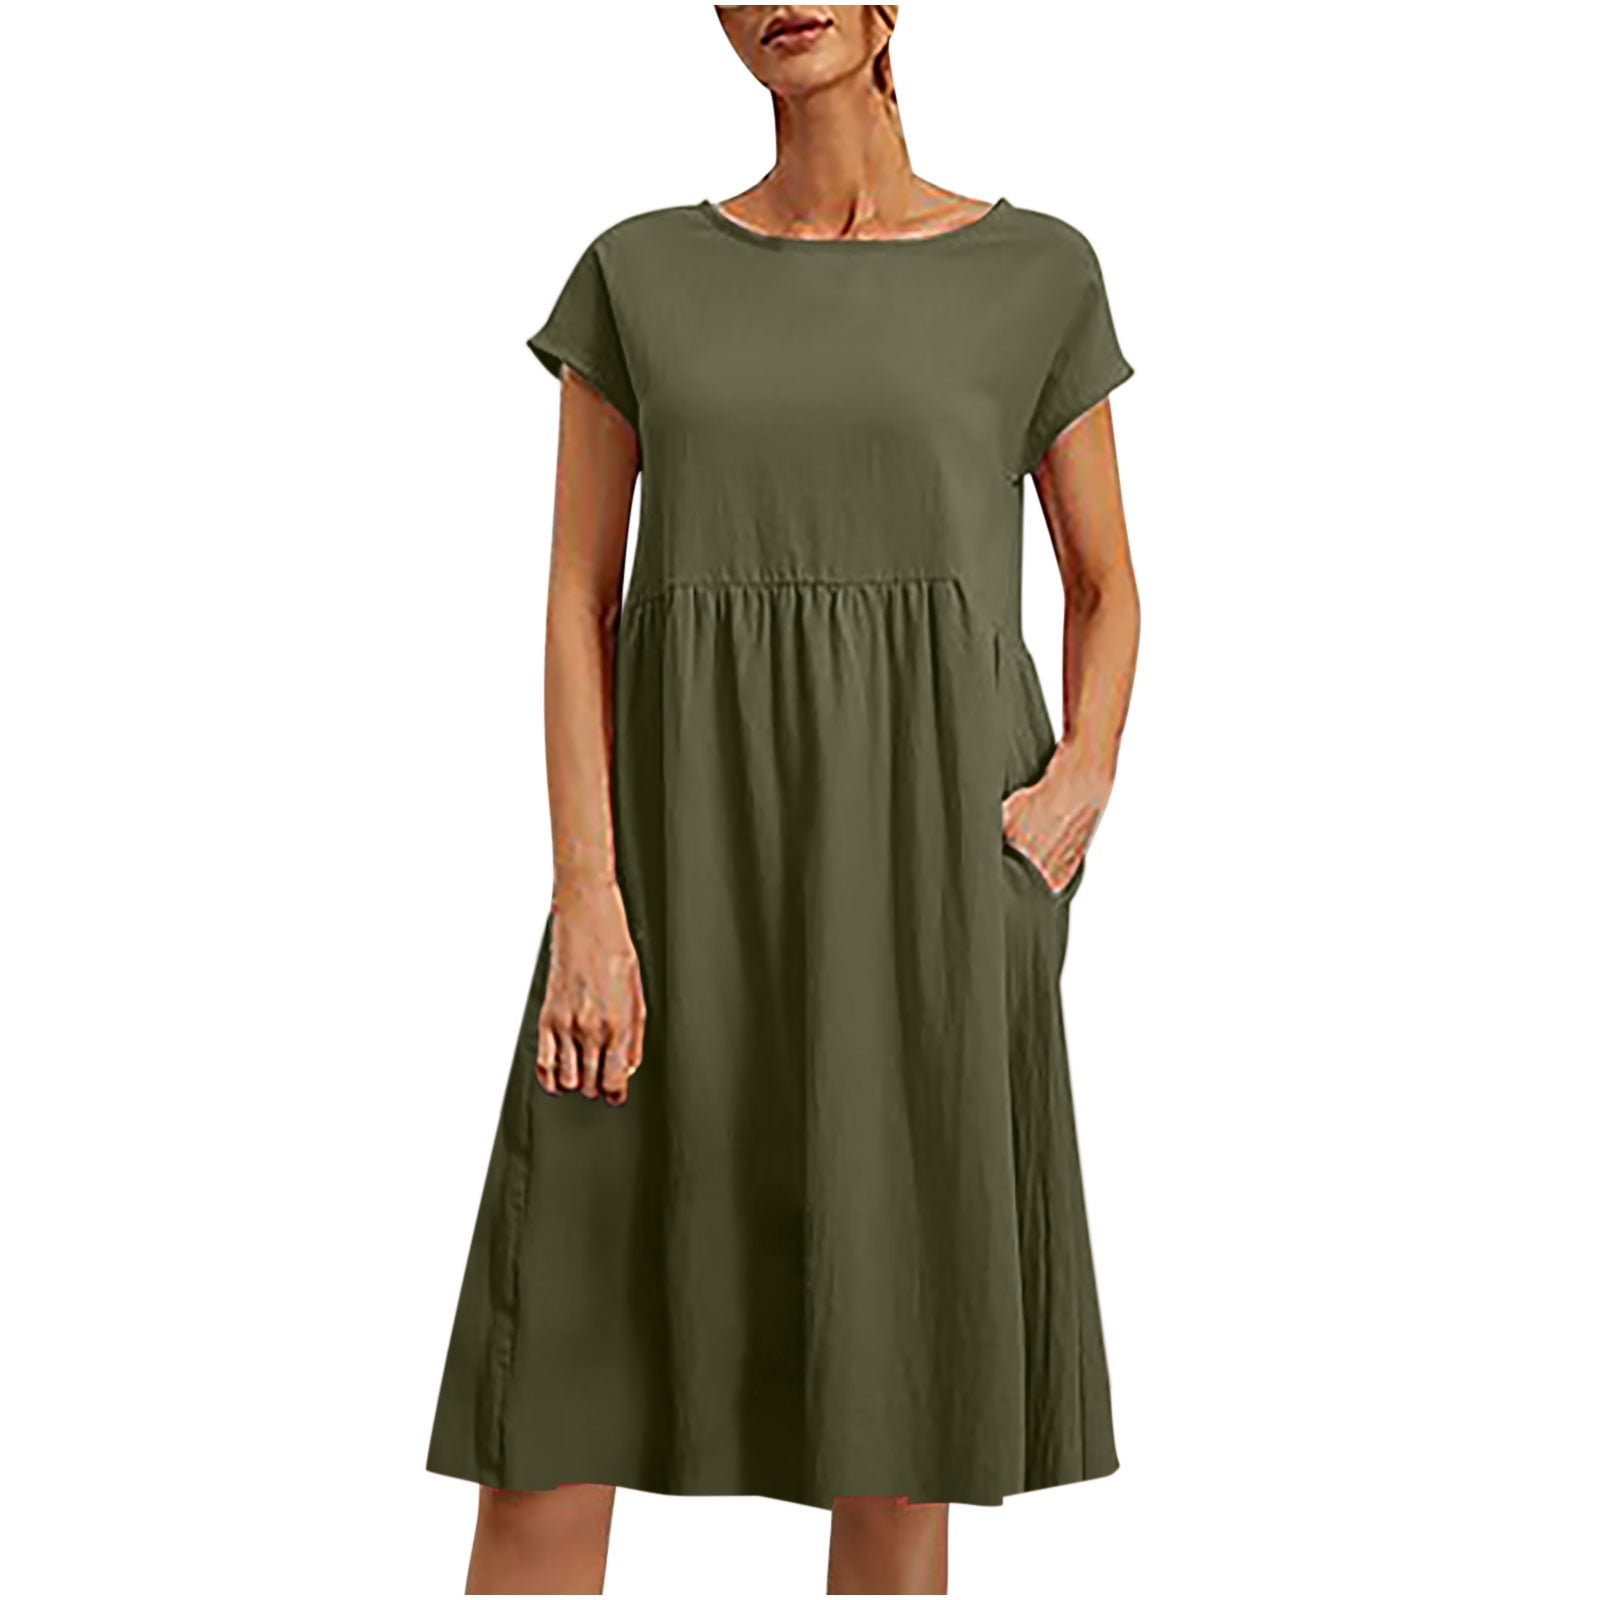 VSSSJ Womens Casual Dresses Loose Round Neck Solid Color Cotton Linen Dress  Summer Short Sleeve High Waist Midi Dress with Pockets 